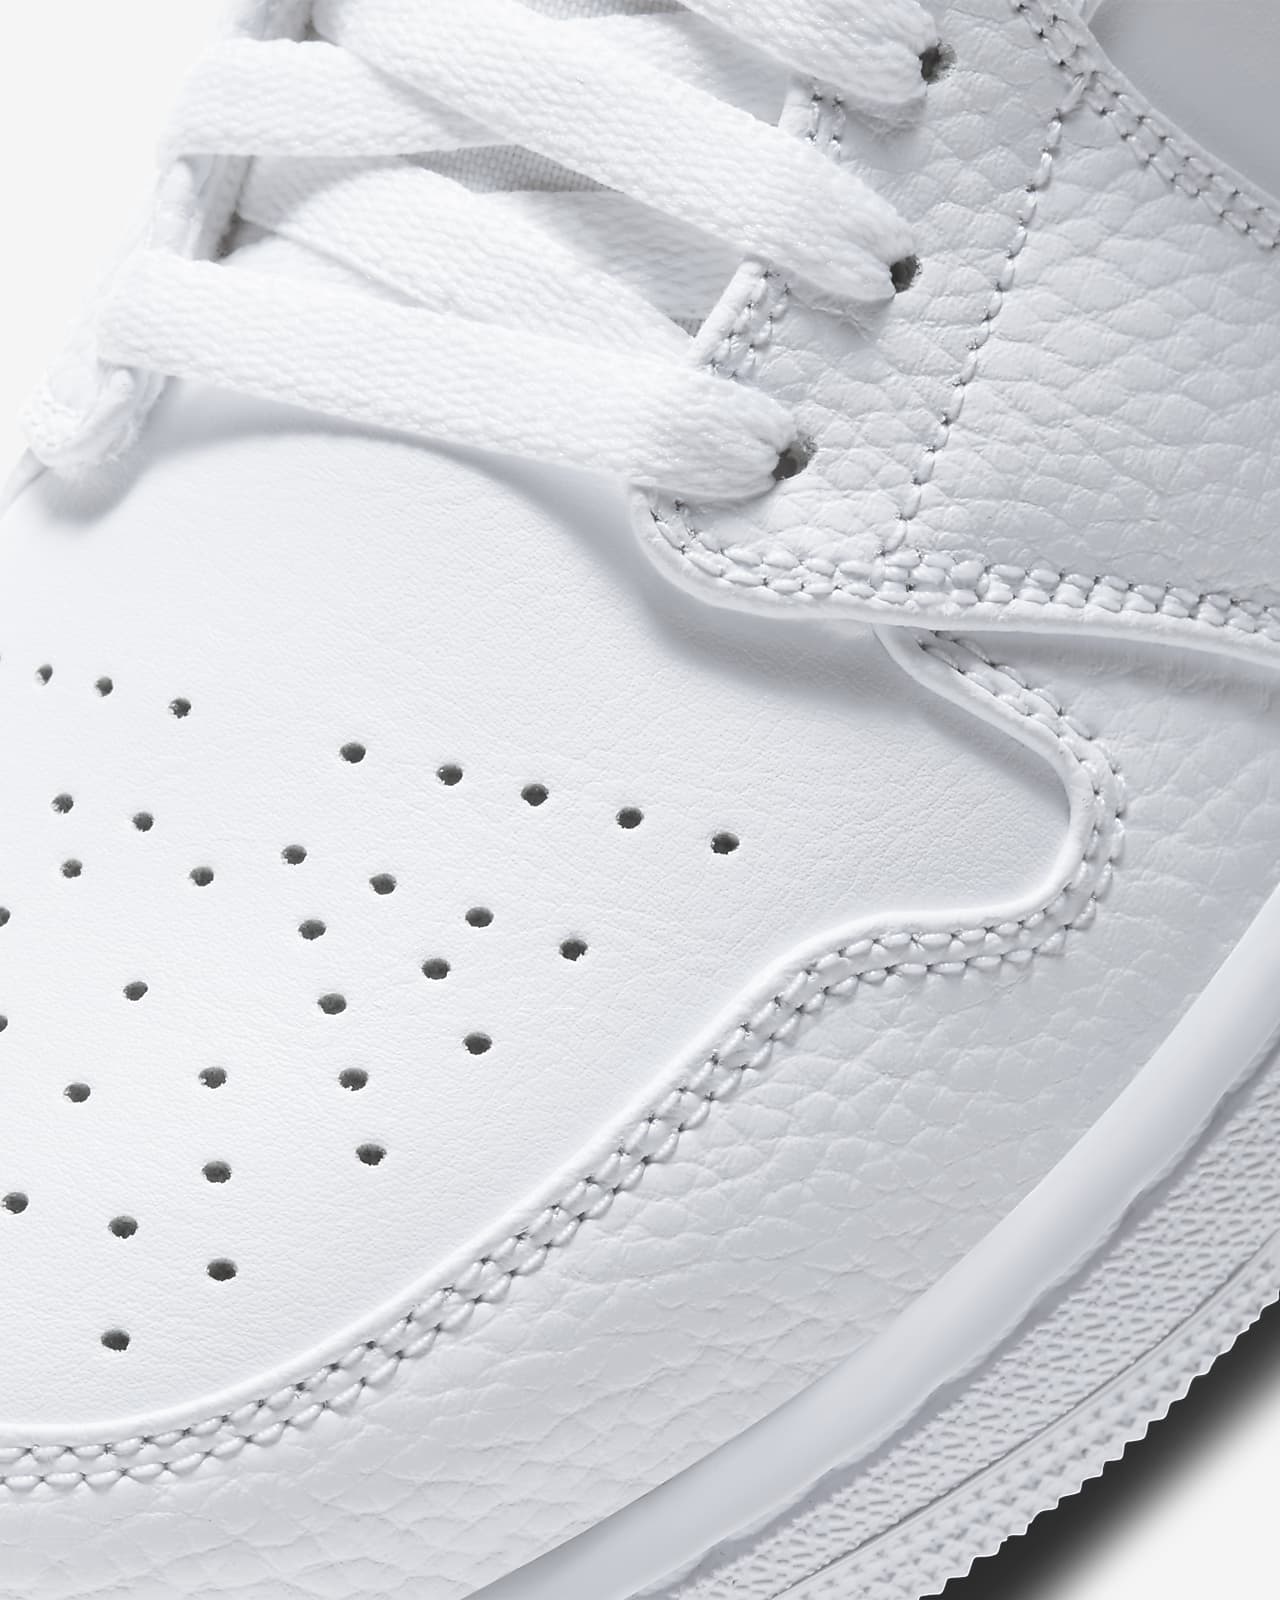 Air Jordan 1 Mid Shoe. Nike.com